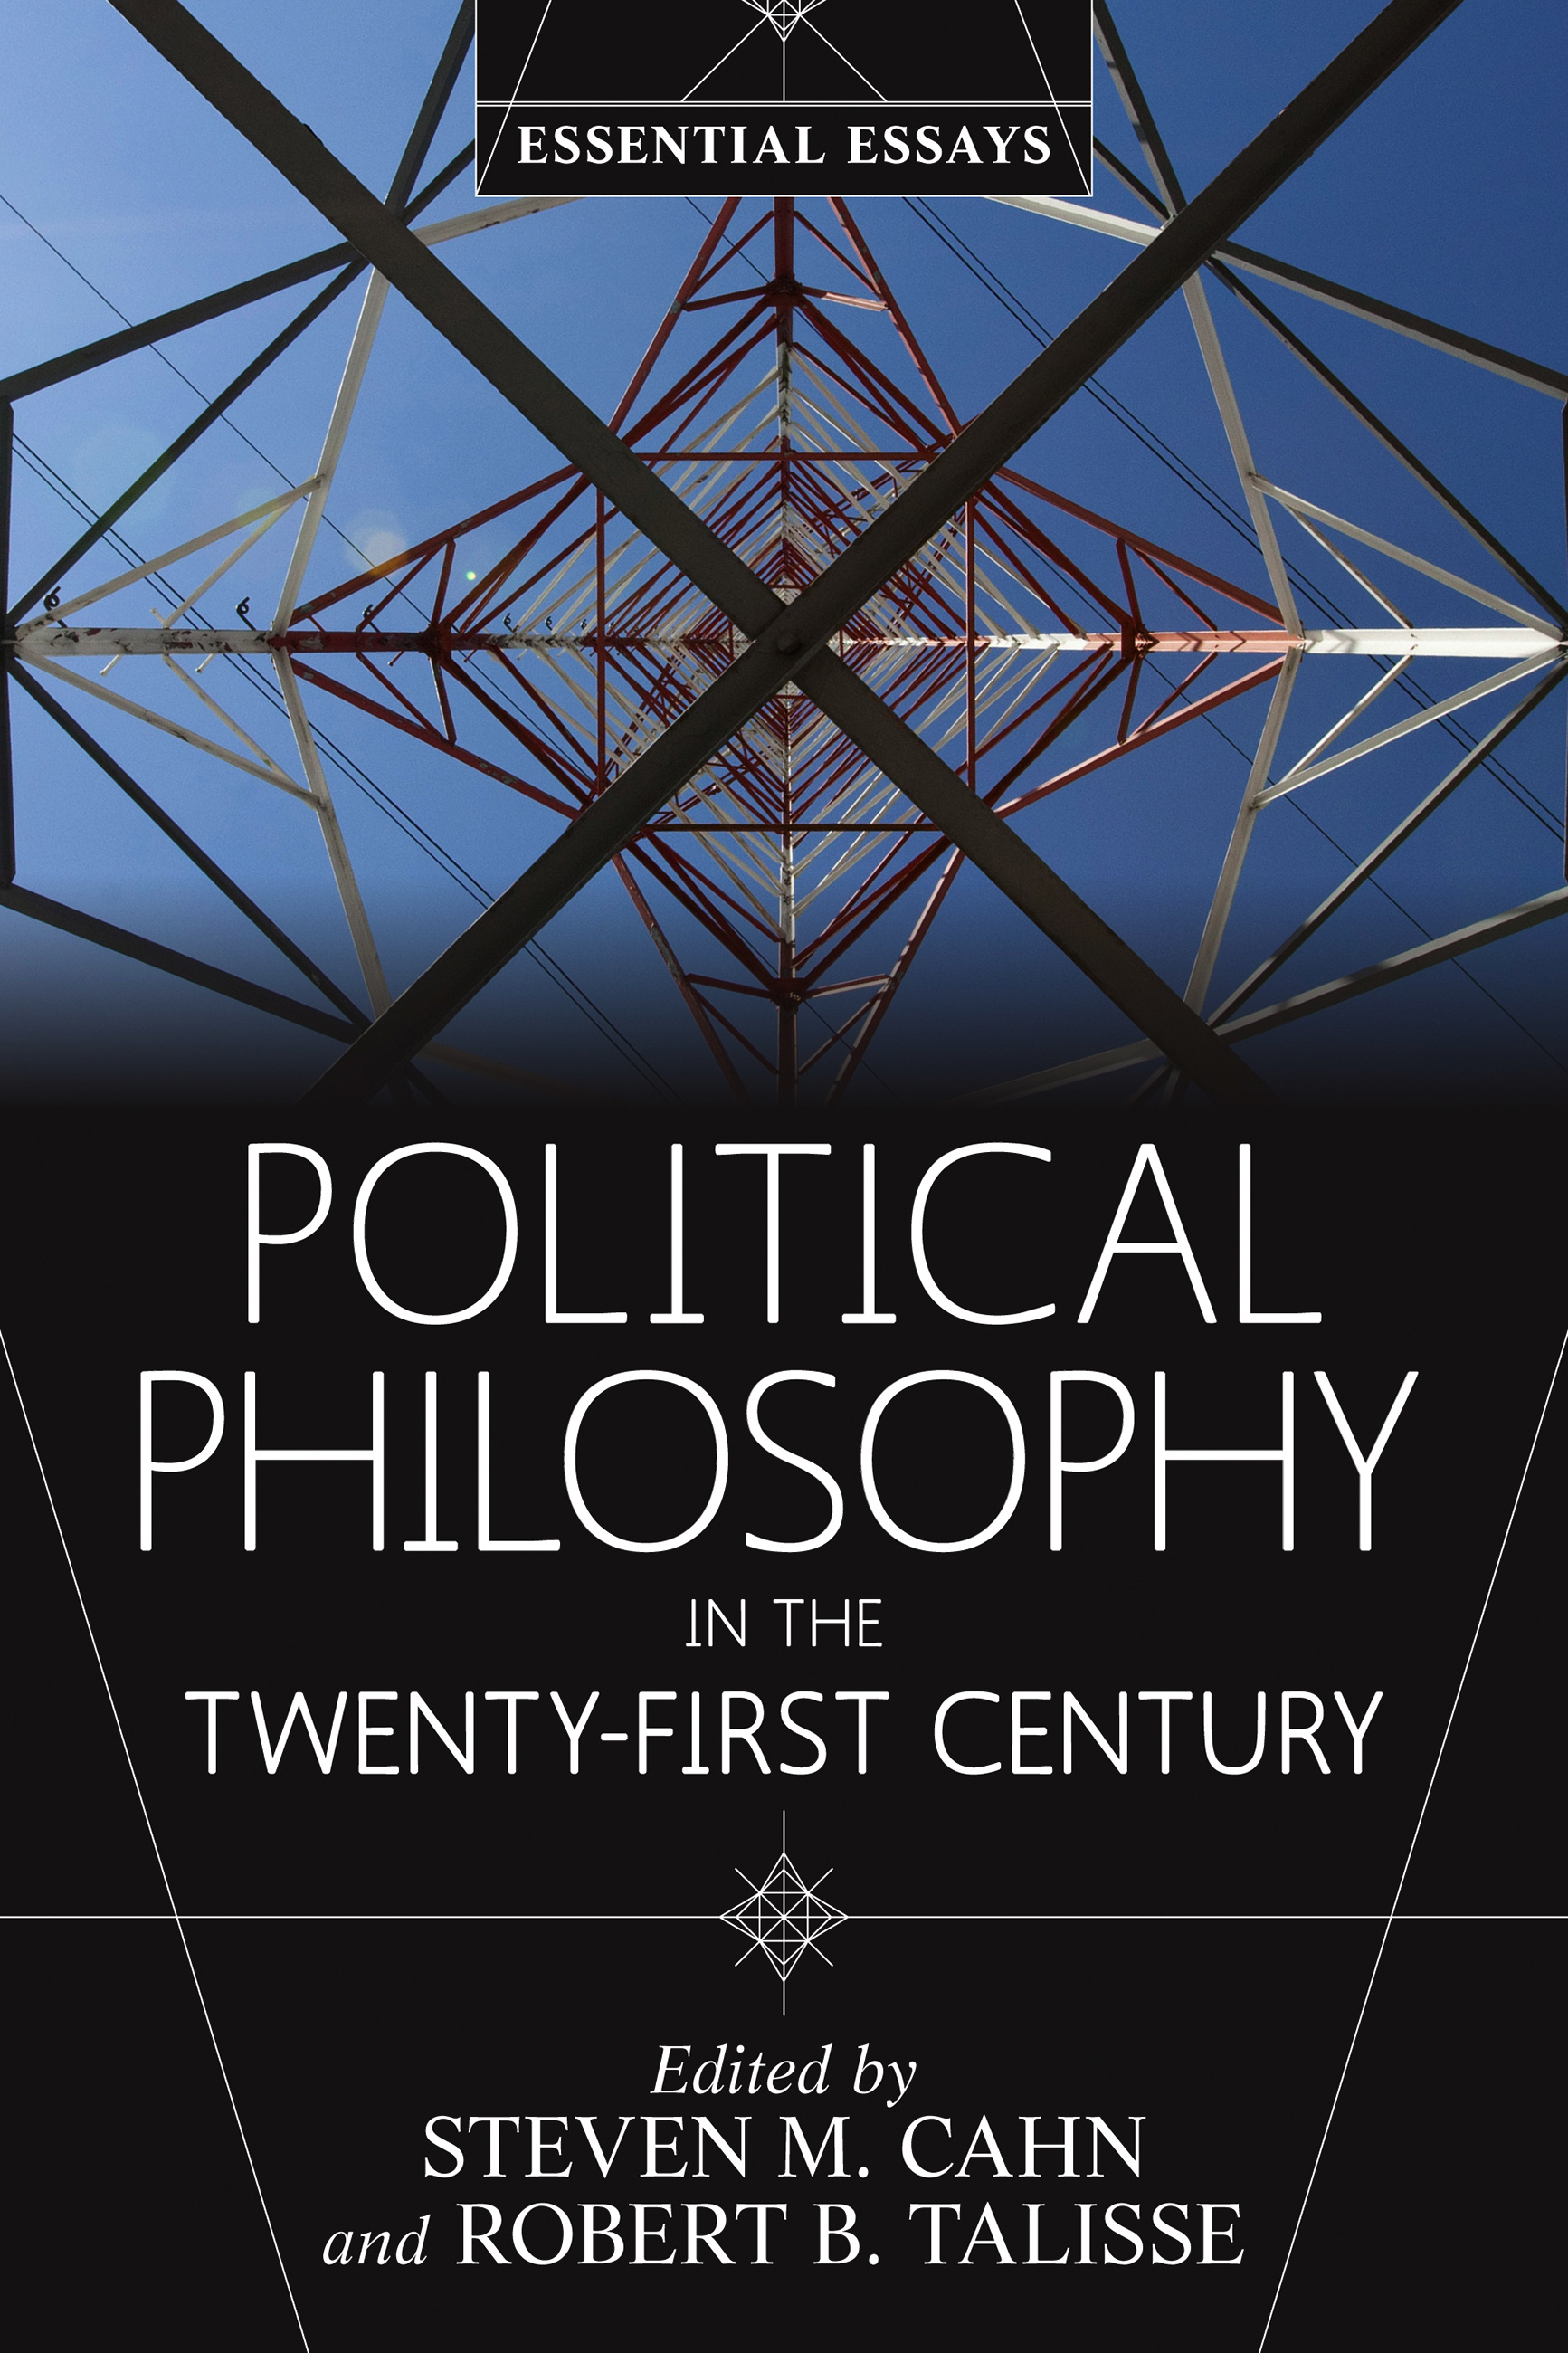 Twenty first century. Technologies of the twenty-first Century. Political Philosophy article in English.